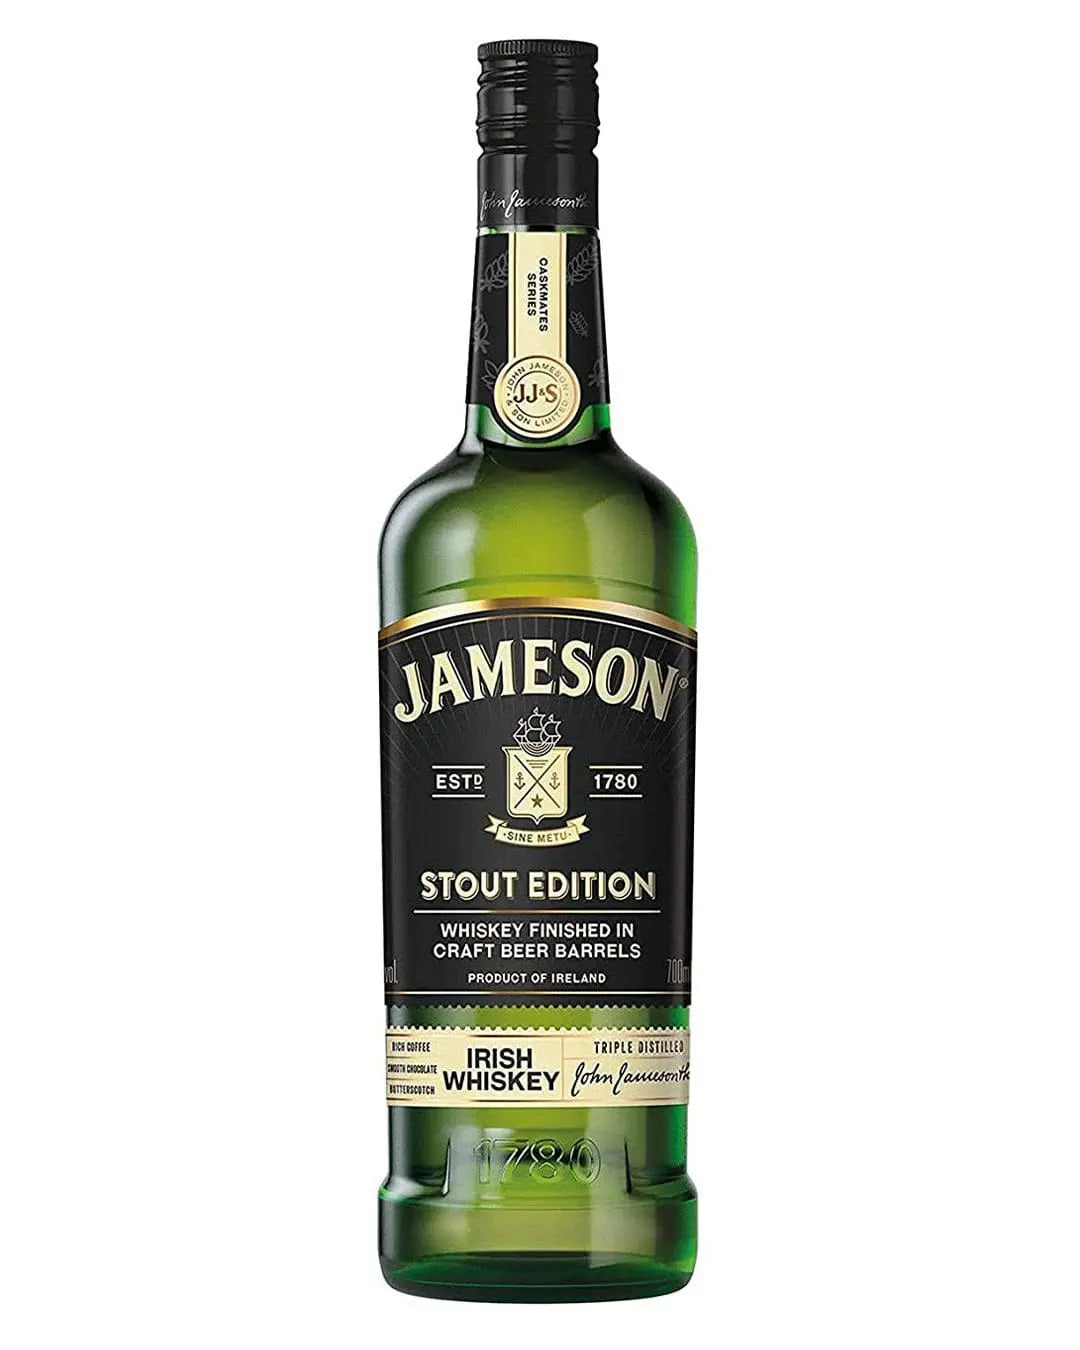 JAMESON FOOTBALL HUB - Jameson Whiskey